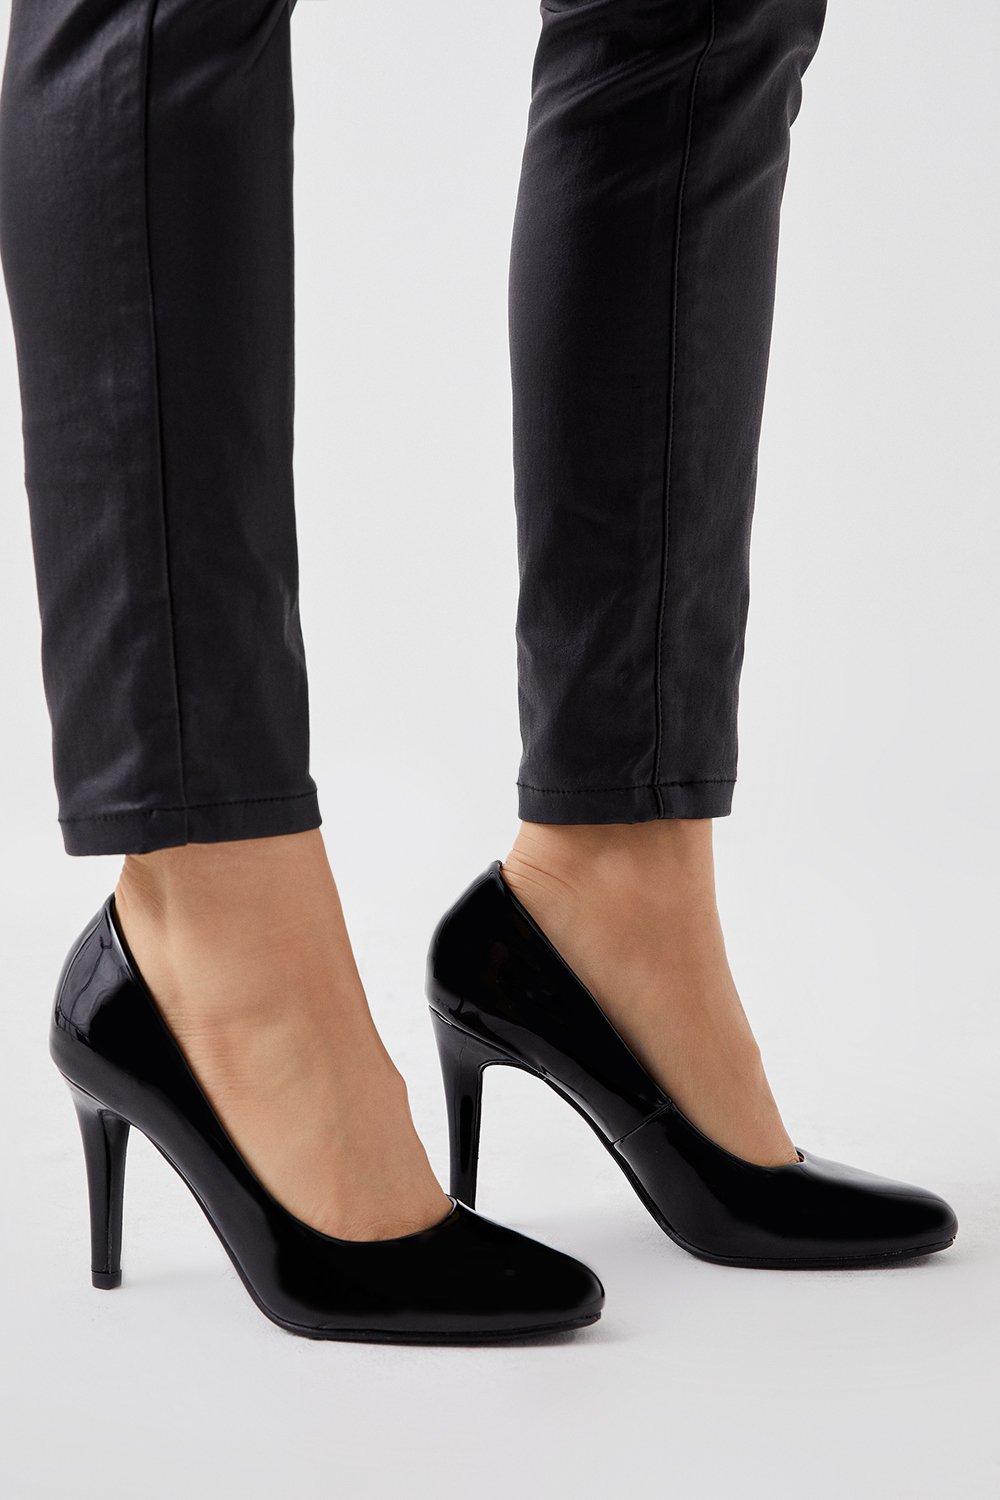 Women’s Dana Round Toe Stiletto Court Shoes - true black - 6